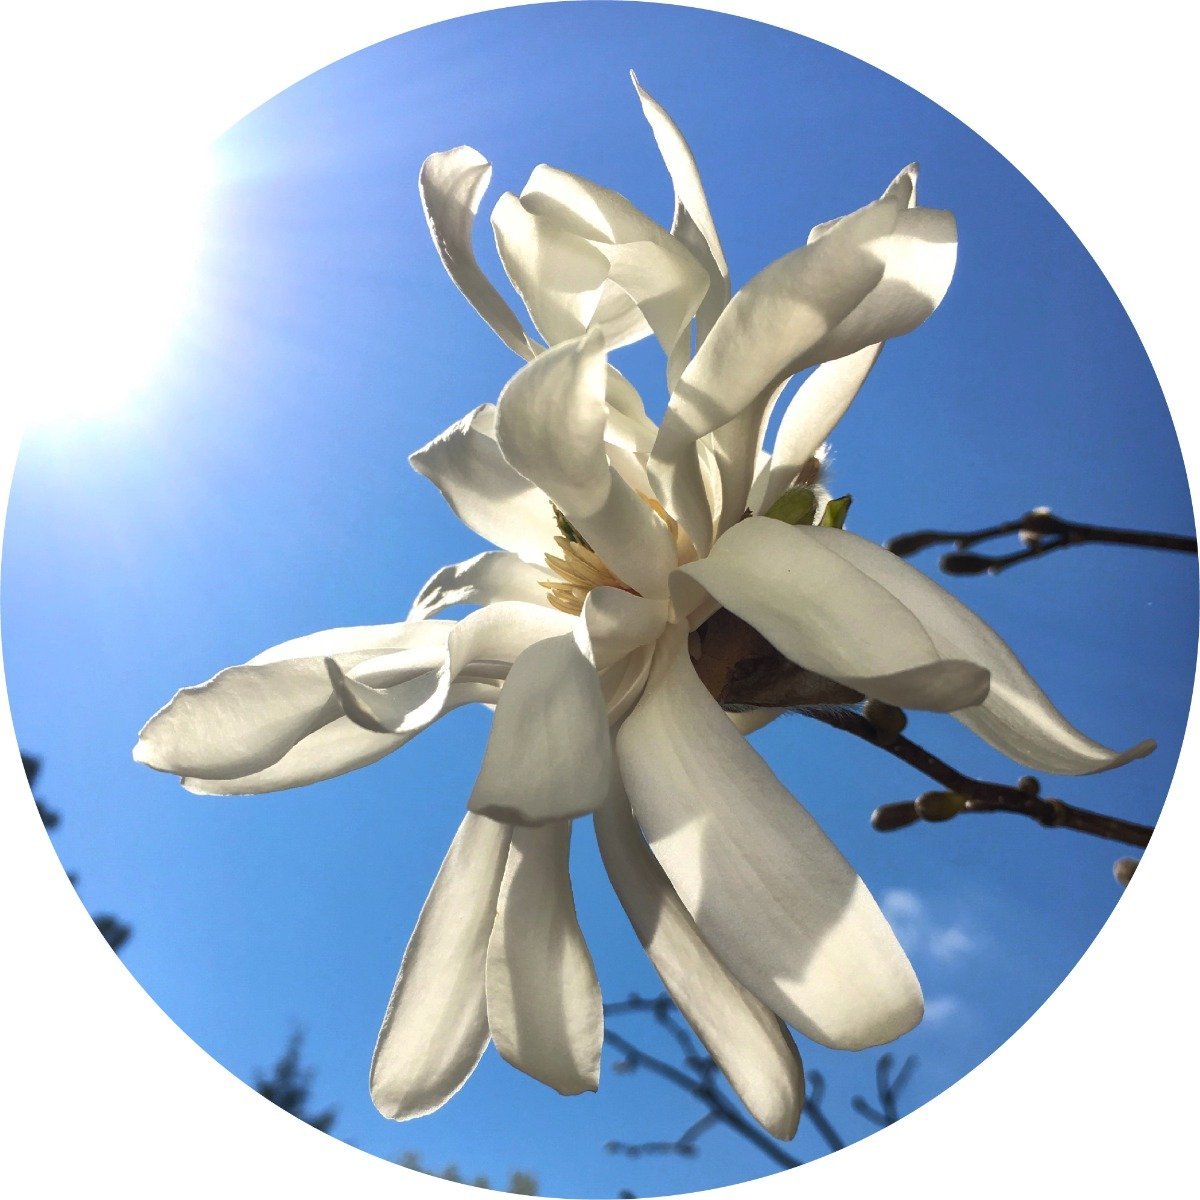 Magnolia Flower Essential Oil – Living Libations